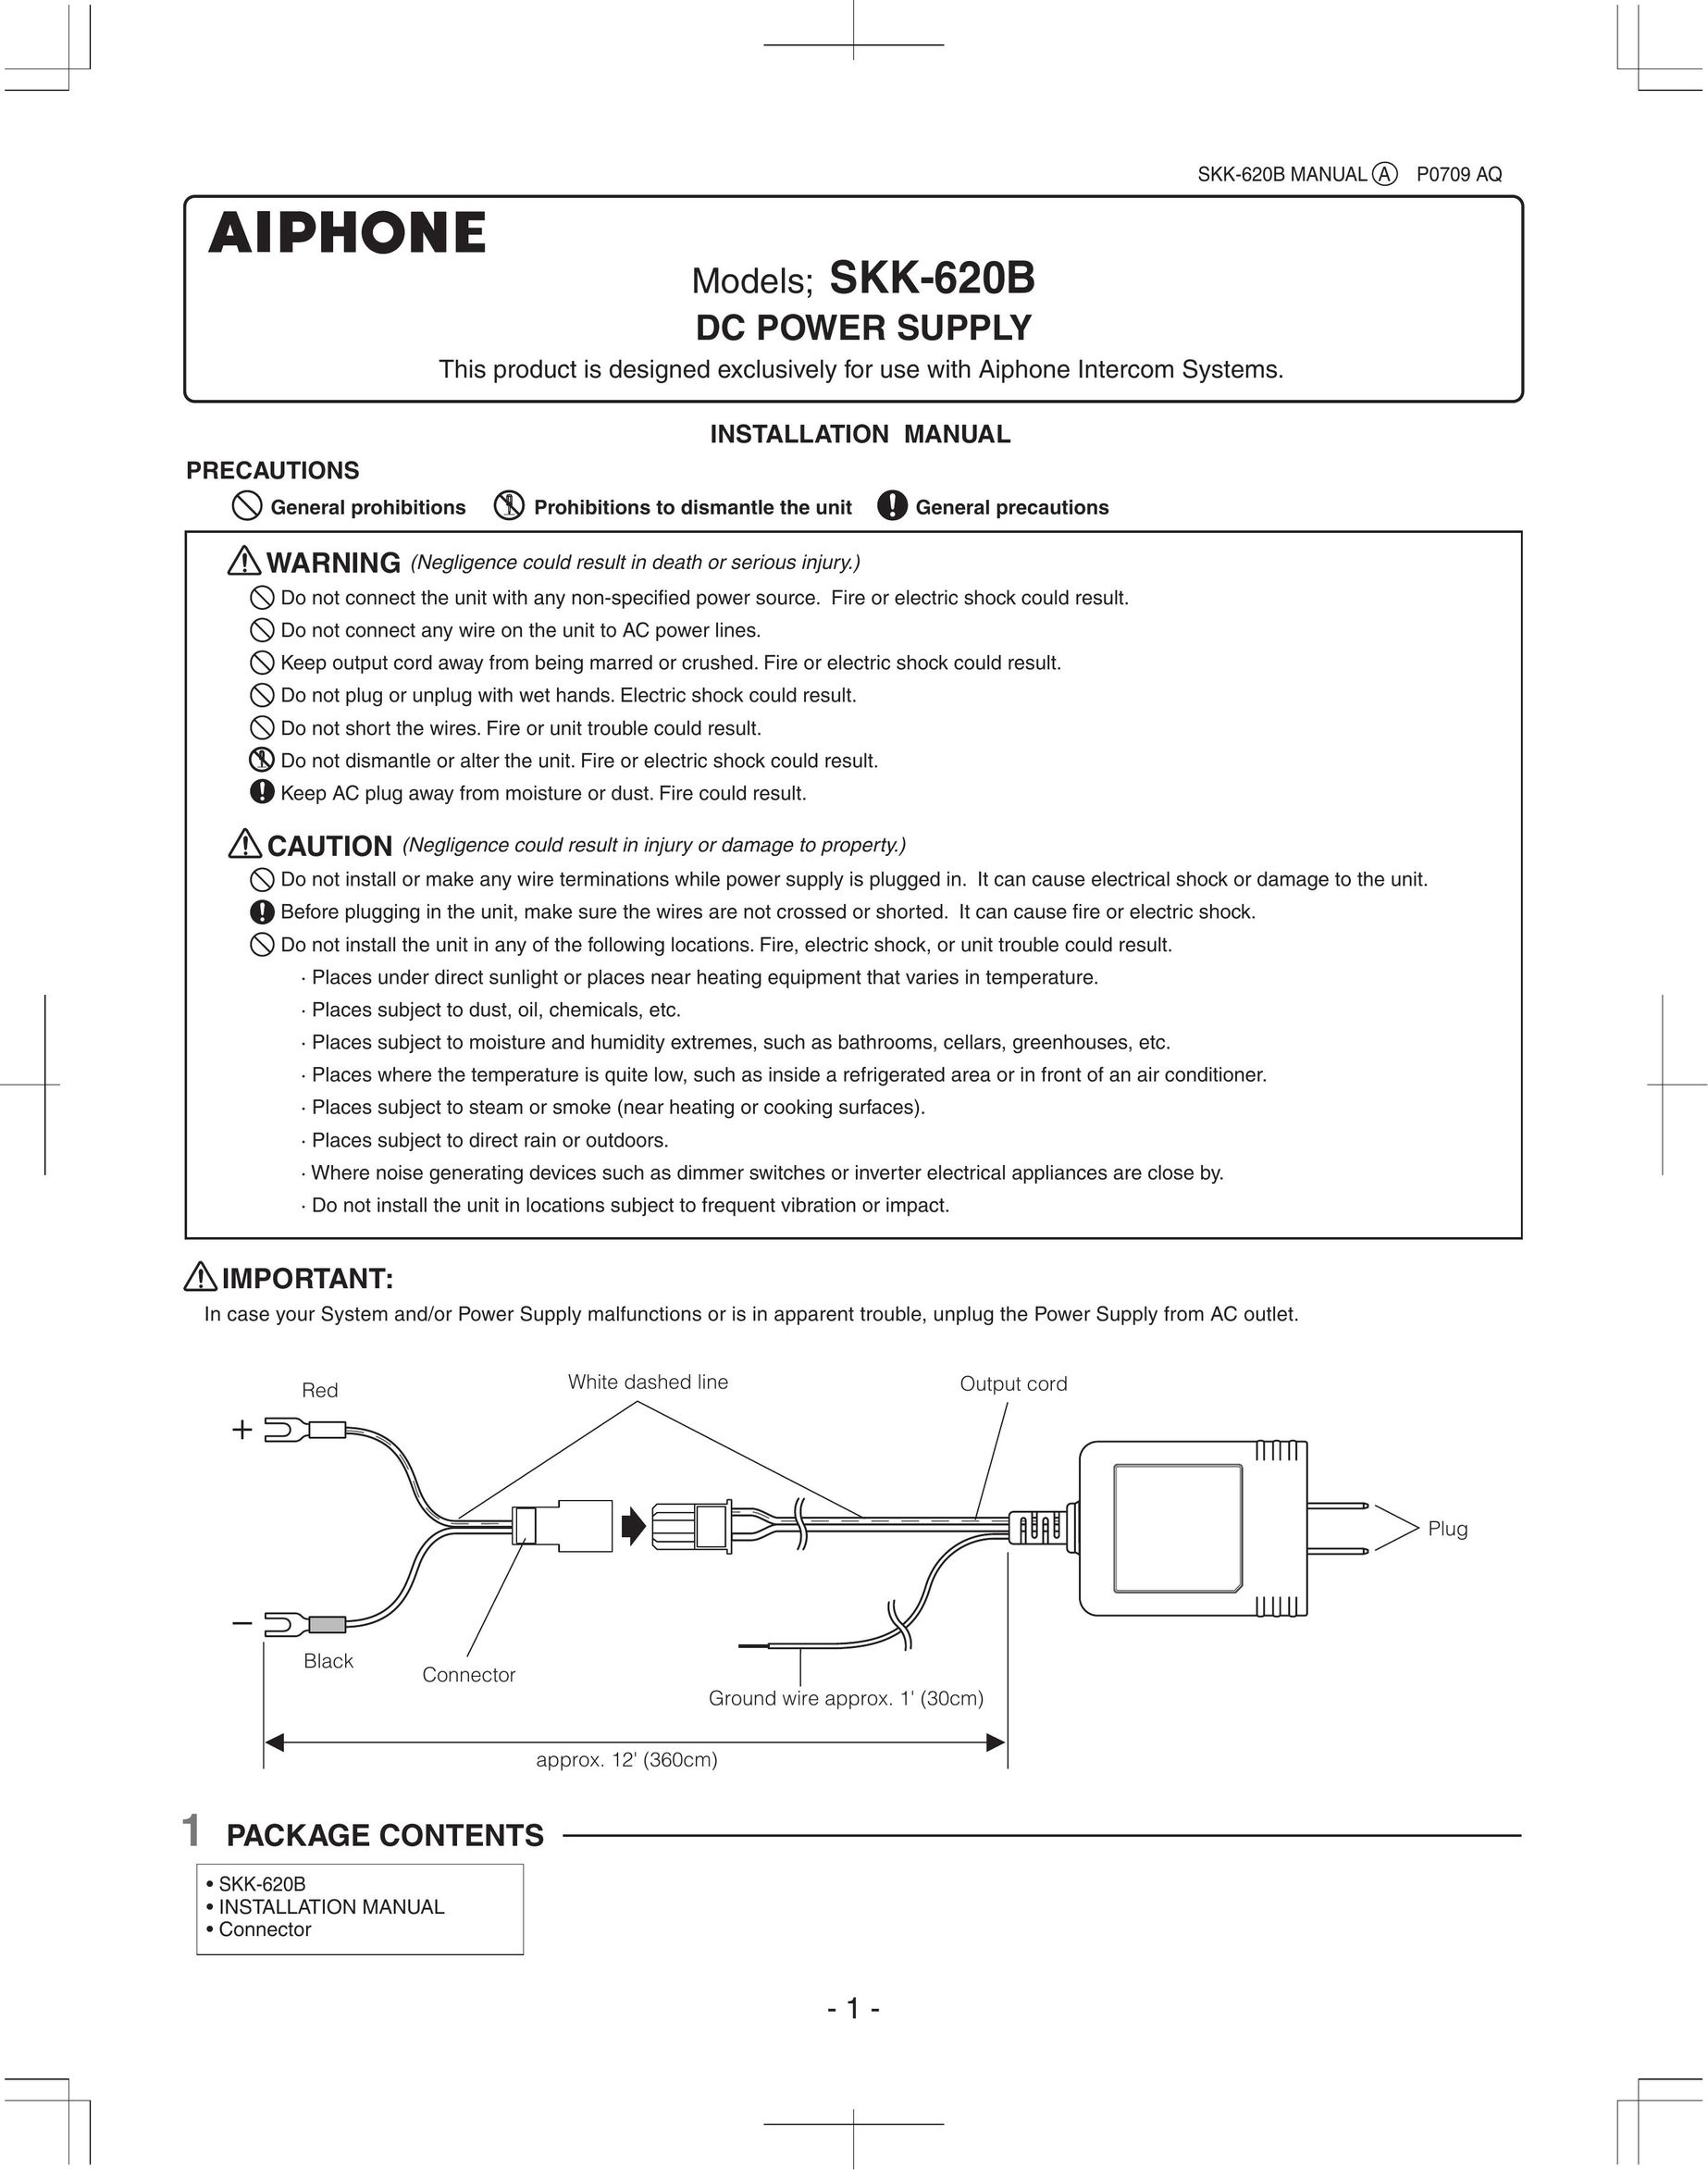 Aiphone SKK-620B Power Supply User Manual